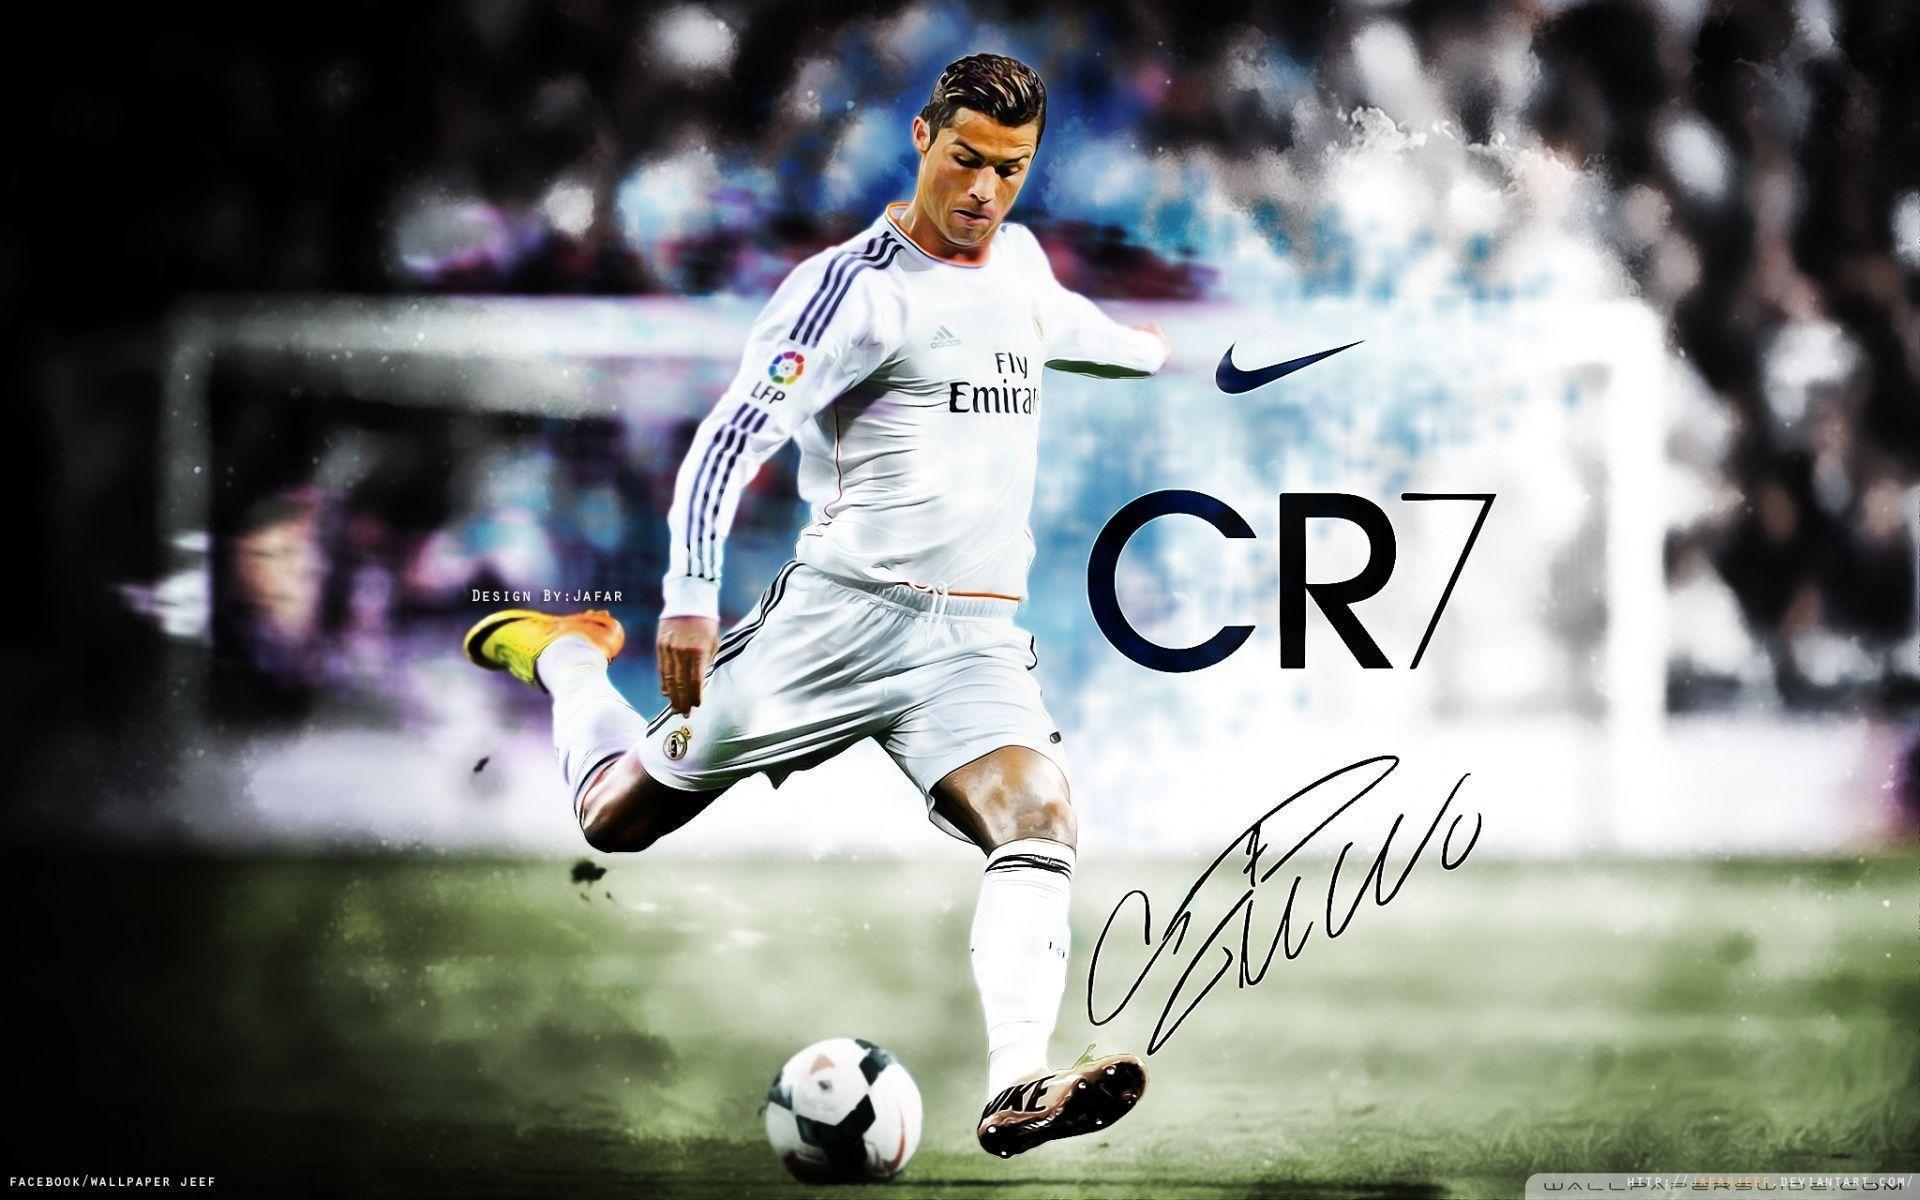 Real Madrid Cristiano Ronaldo wallpaper. Free Windows 10 Themes